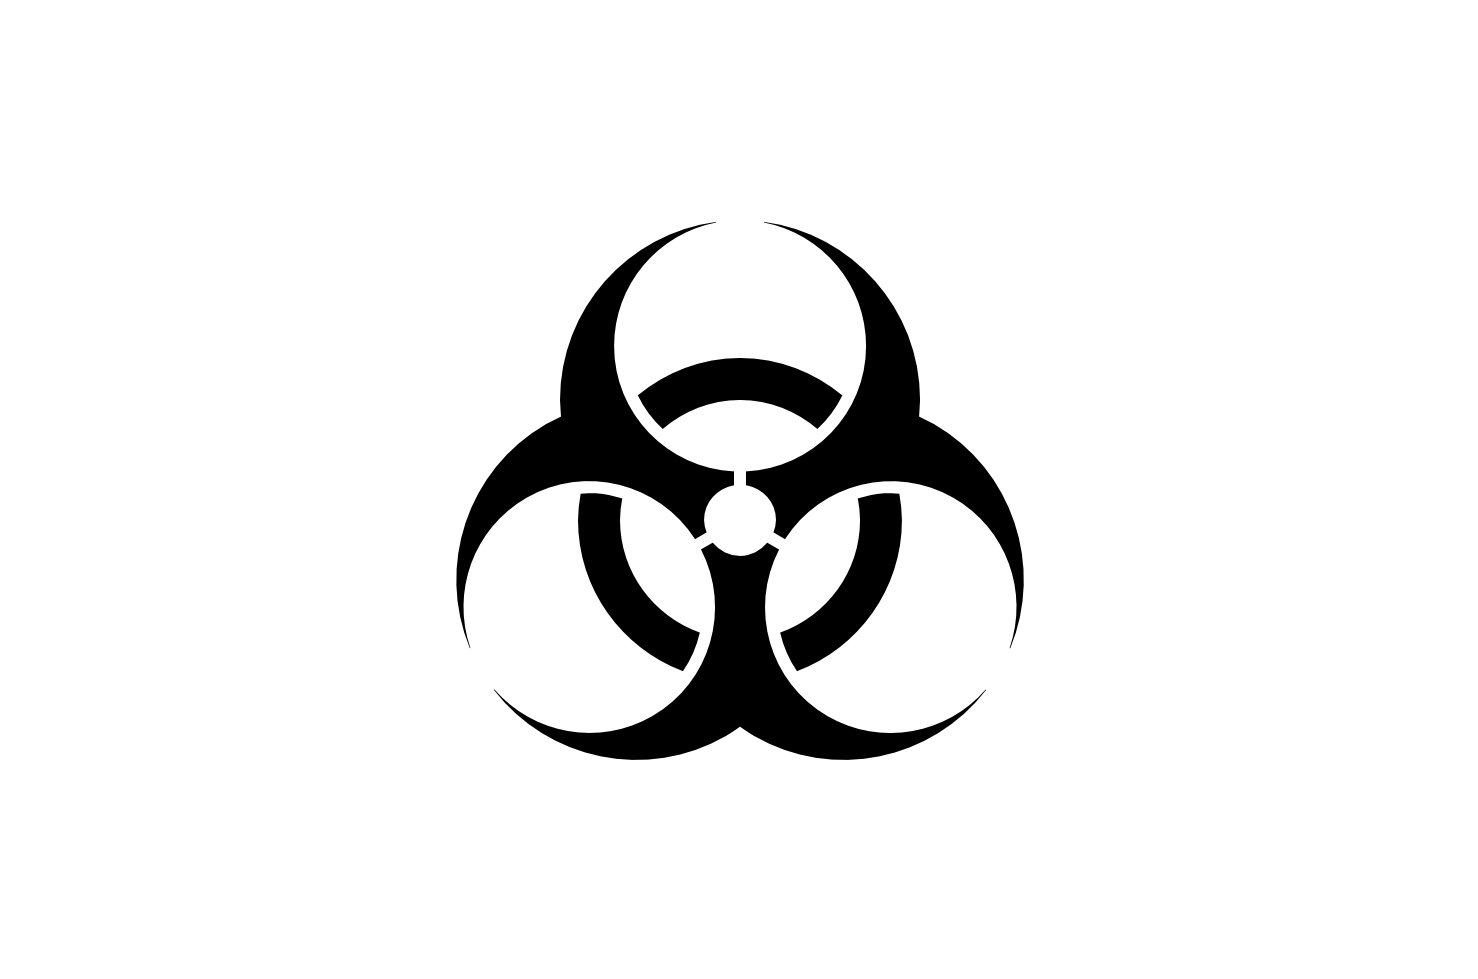 Cool Biohazard Symbols Car Pictures